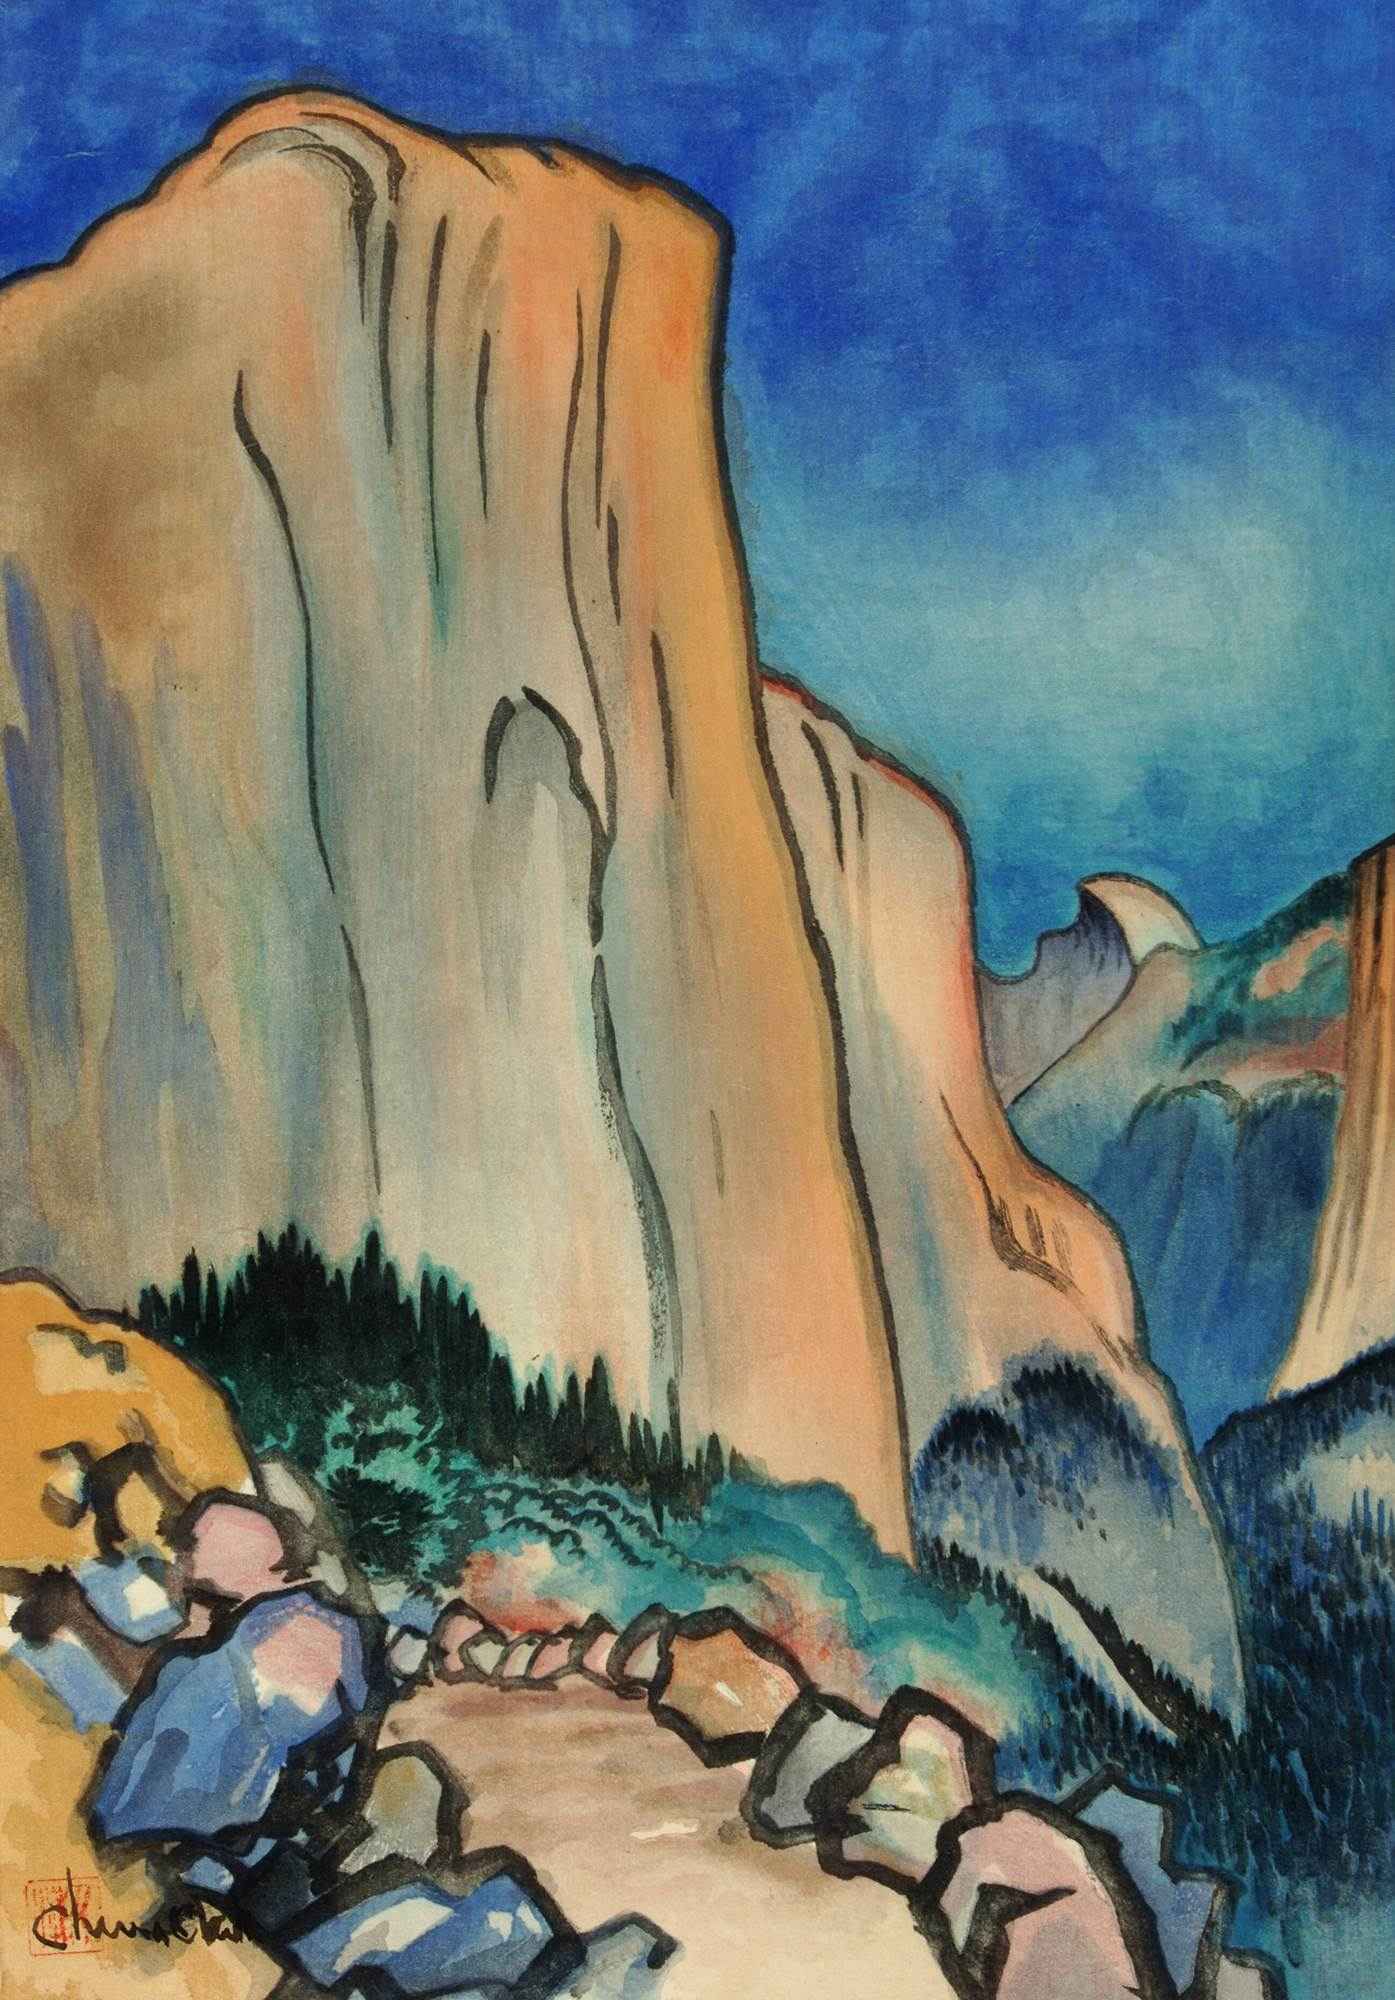 Woodblock and ink painting of El Capitan, by Chiura Obata